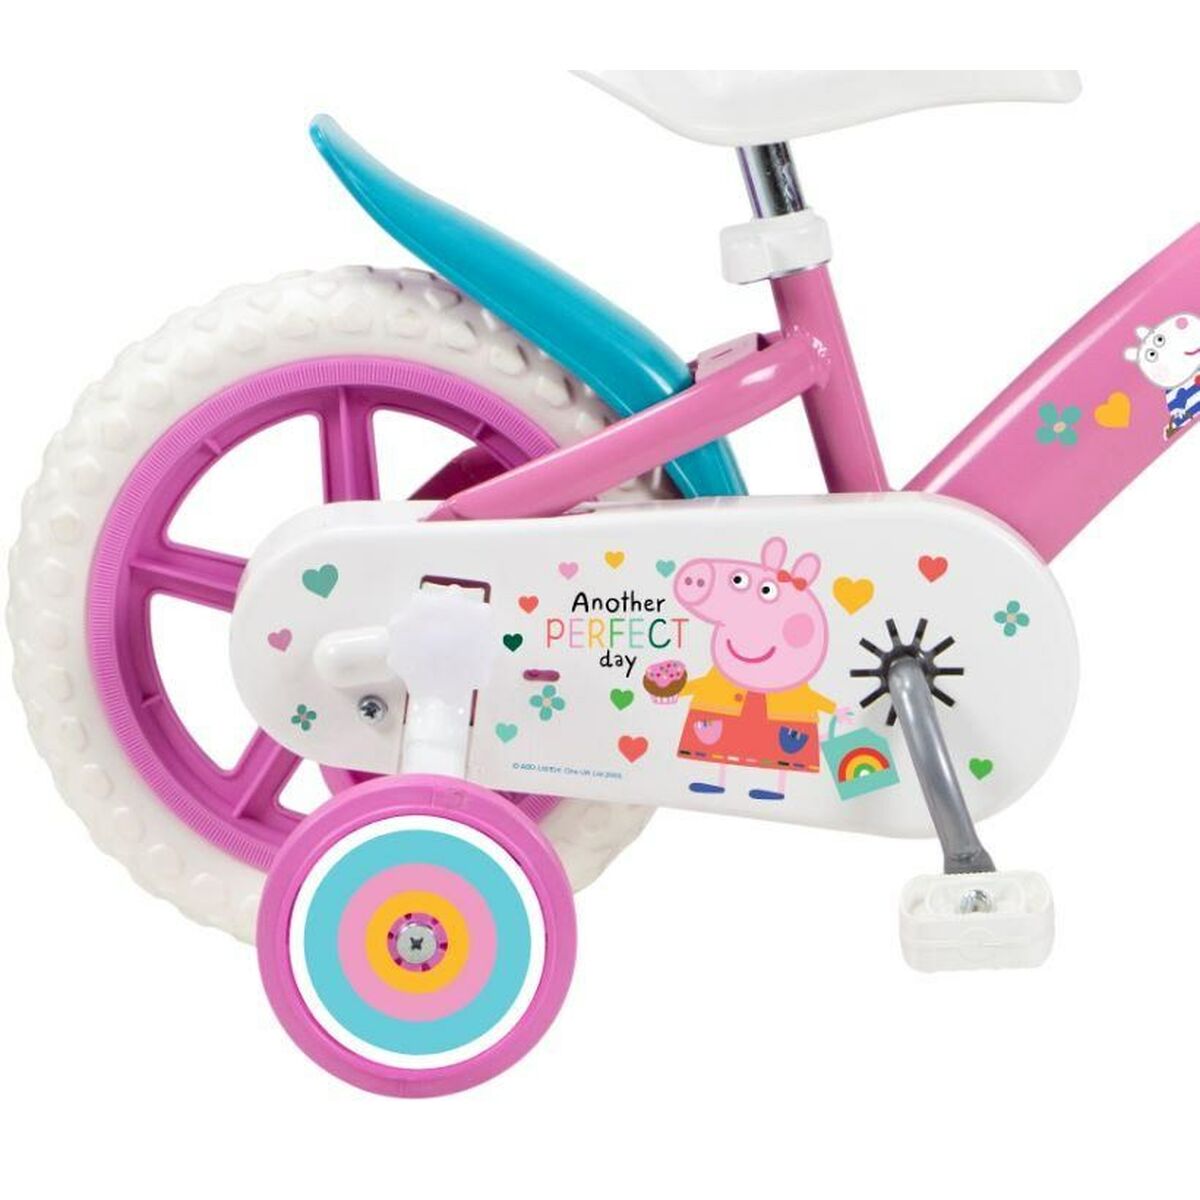 Детский велосипед Toimsa TOI1195 Peppa Pig